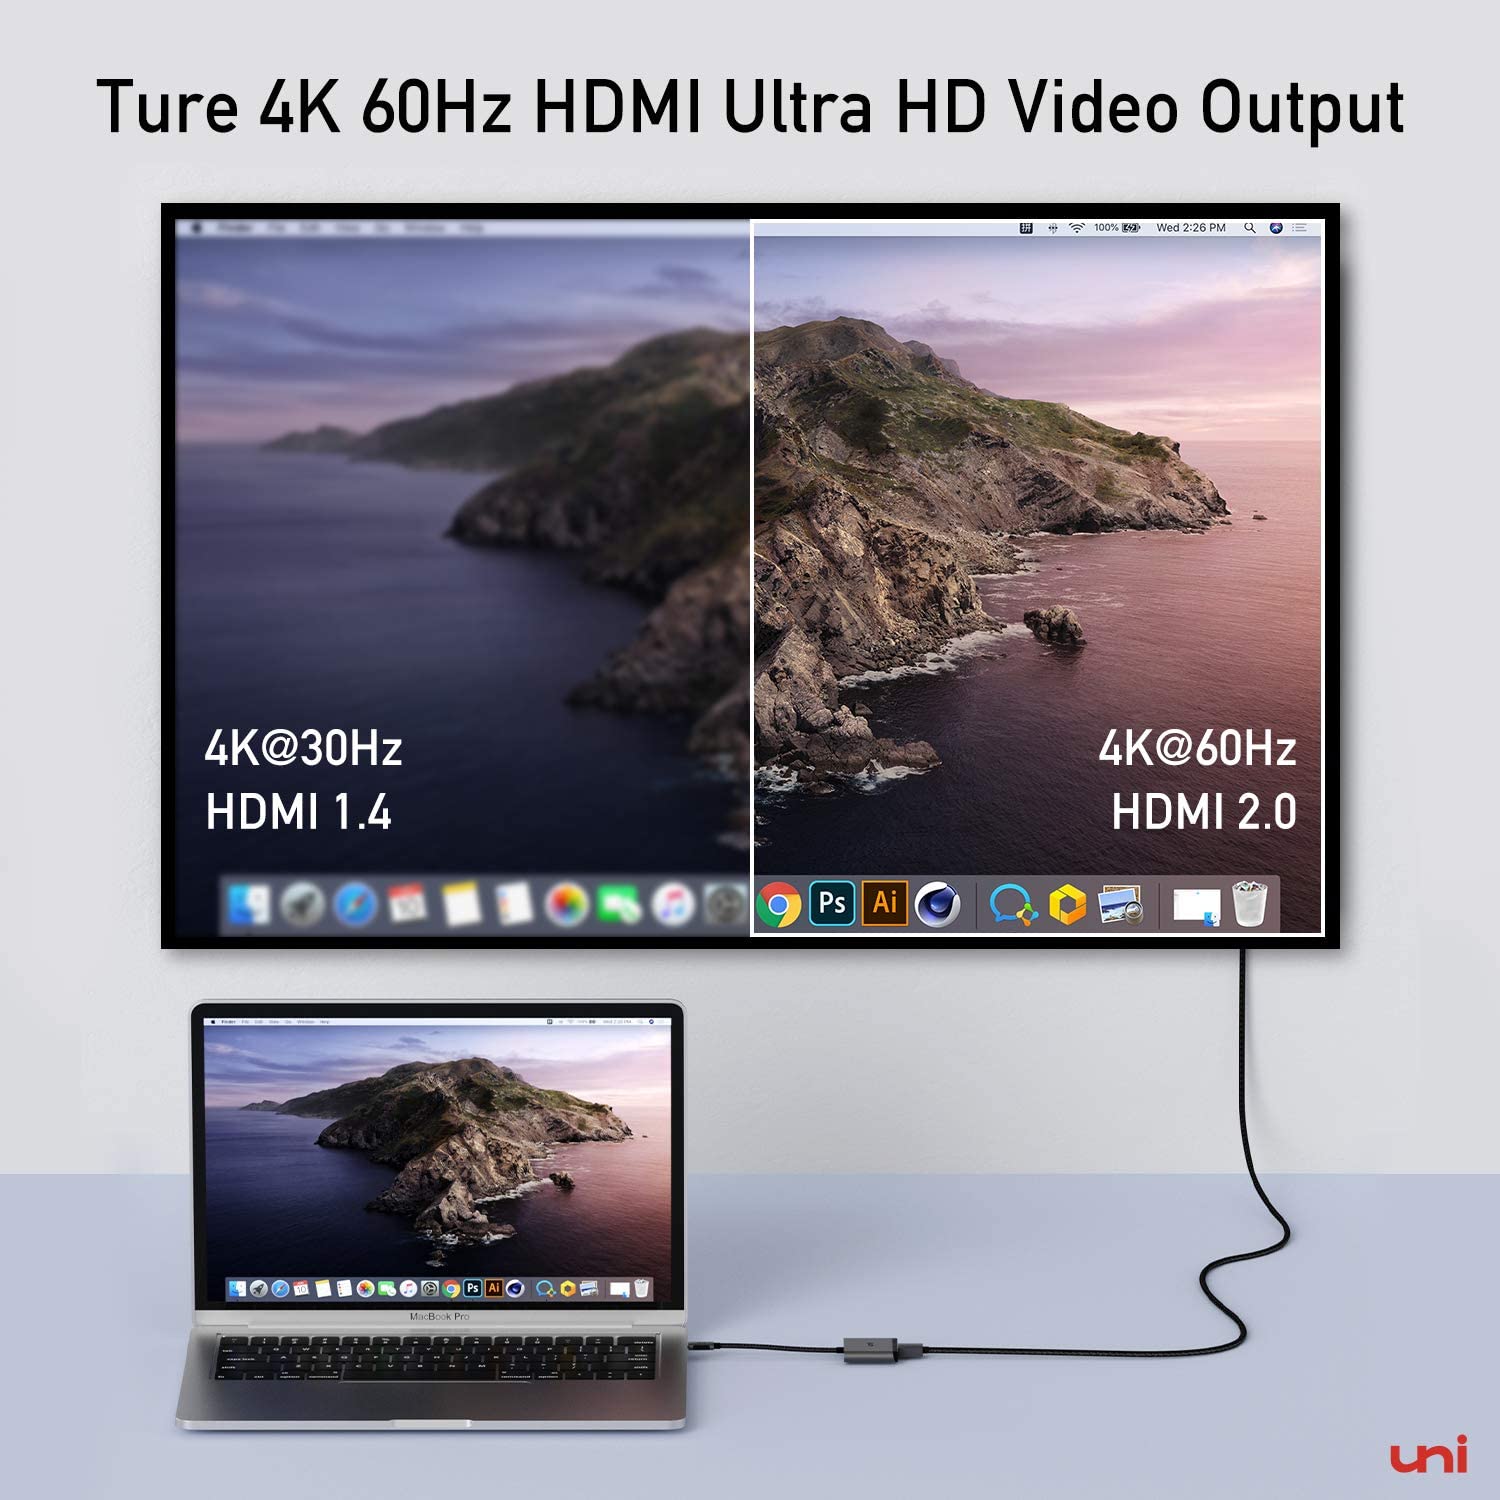 Adaptador Multipuertos USB C a HDMI 4K - Adaptadores Multipuertos